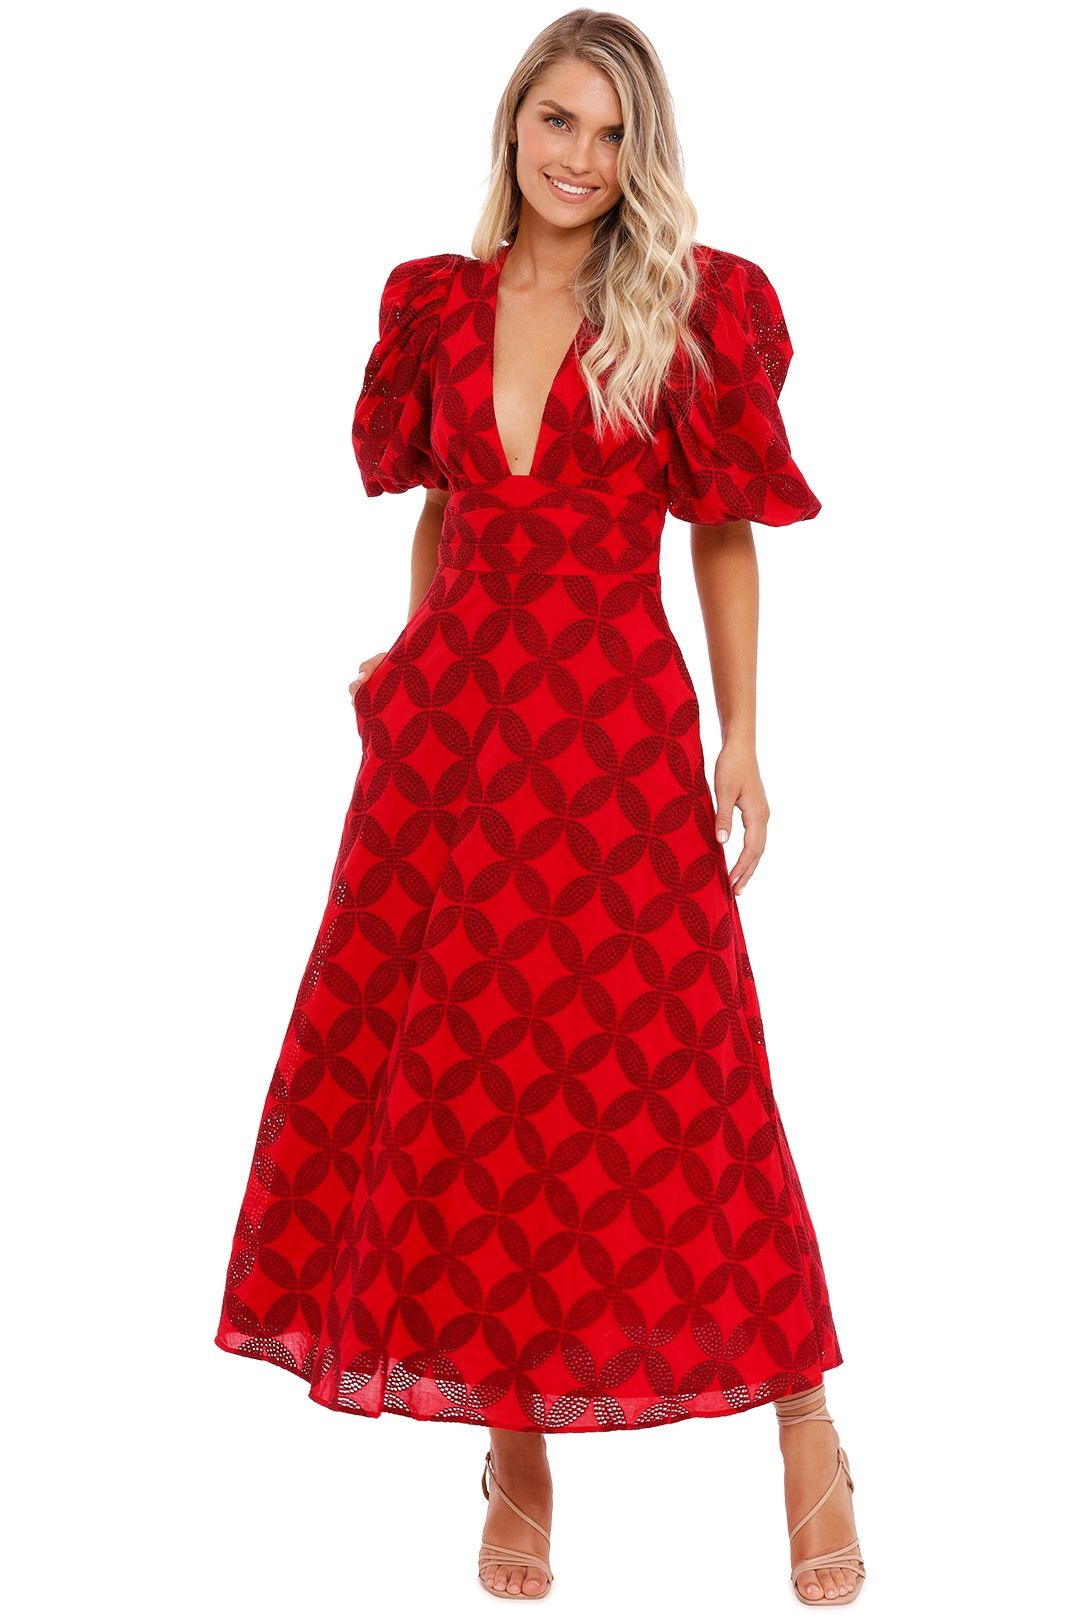 Acler Hamilton Dress red